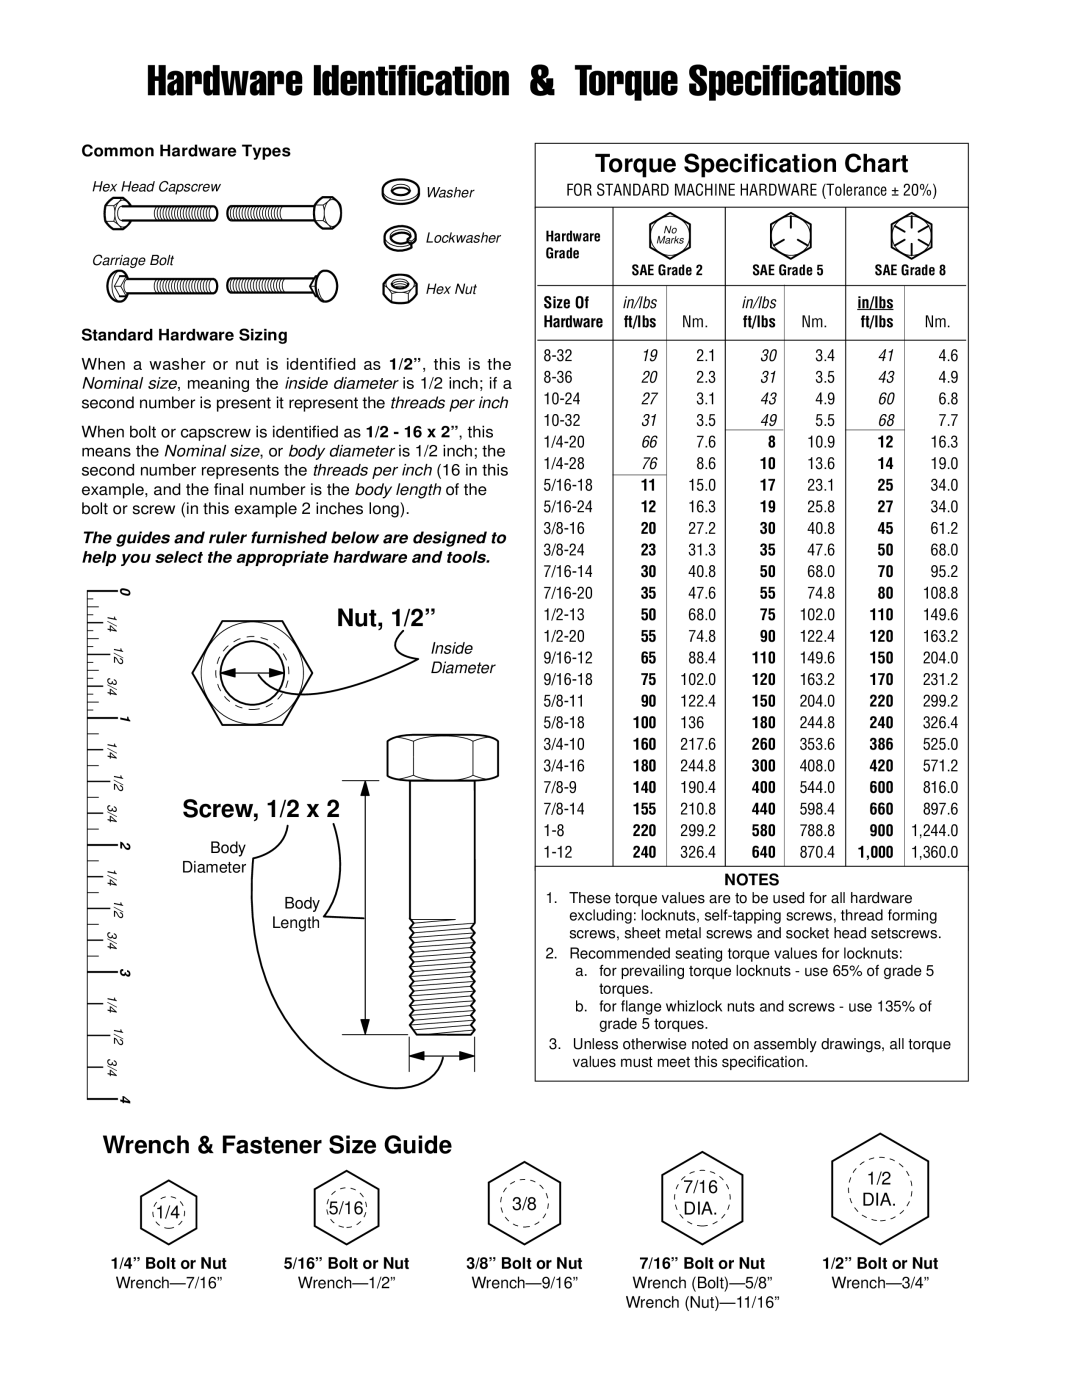 Snapper 2385 manual Hardware Identification & Torque Specifications, Torque Specification Chart, Nut, 1/2”, Screw, 1/2 